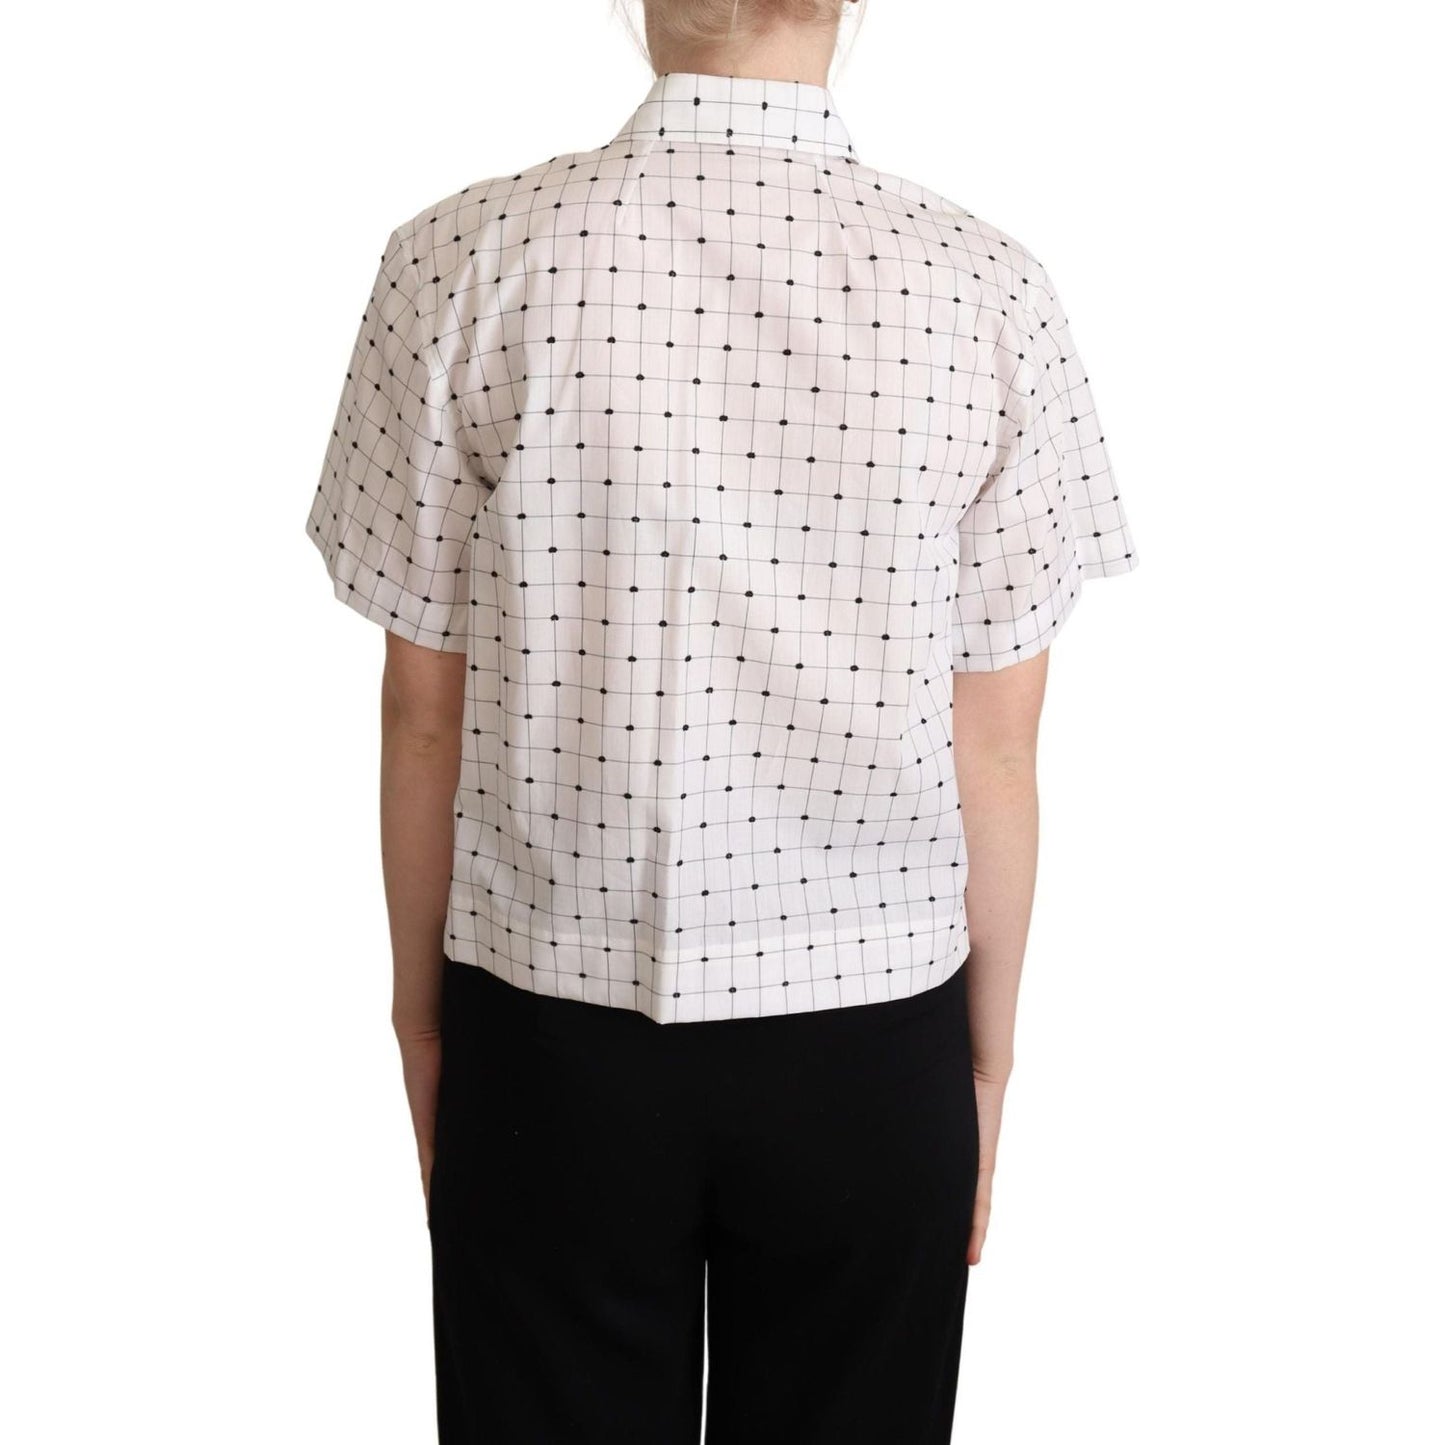 Dolce & Gabbana Chic Monochrome Polka Dot Polo Top Blouse Top white-polka-dot-cotton-collared-shirt-top